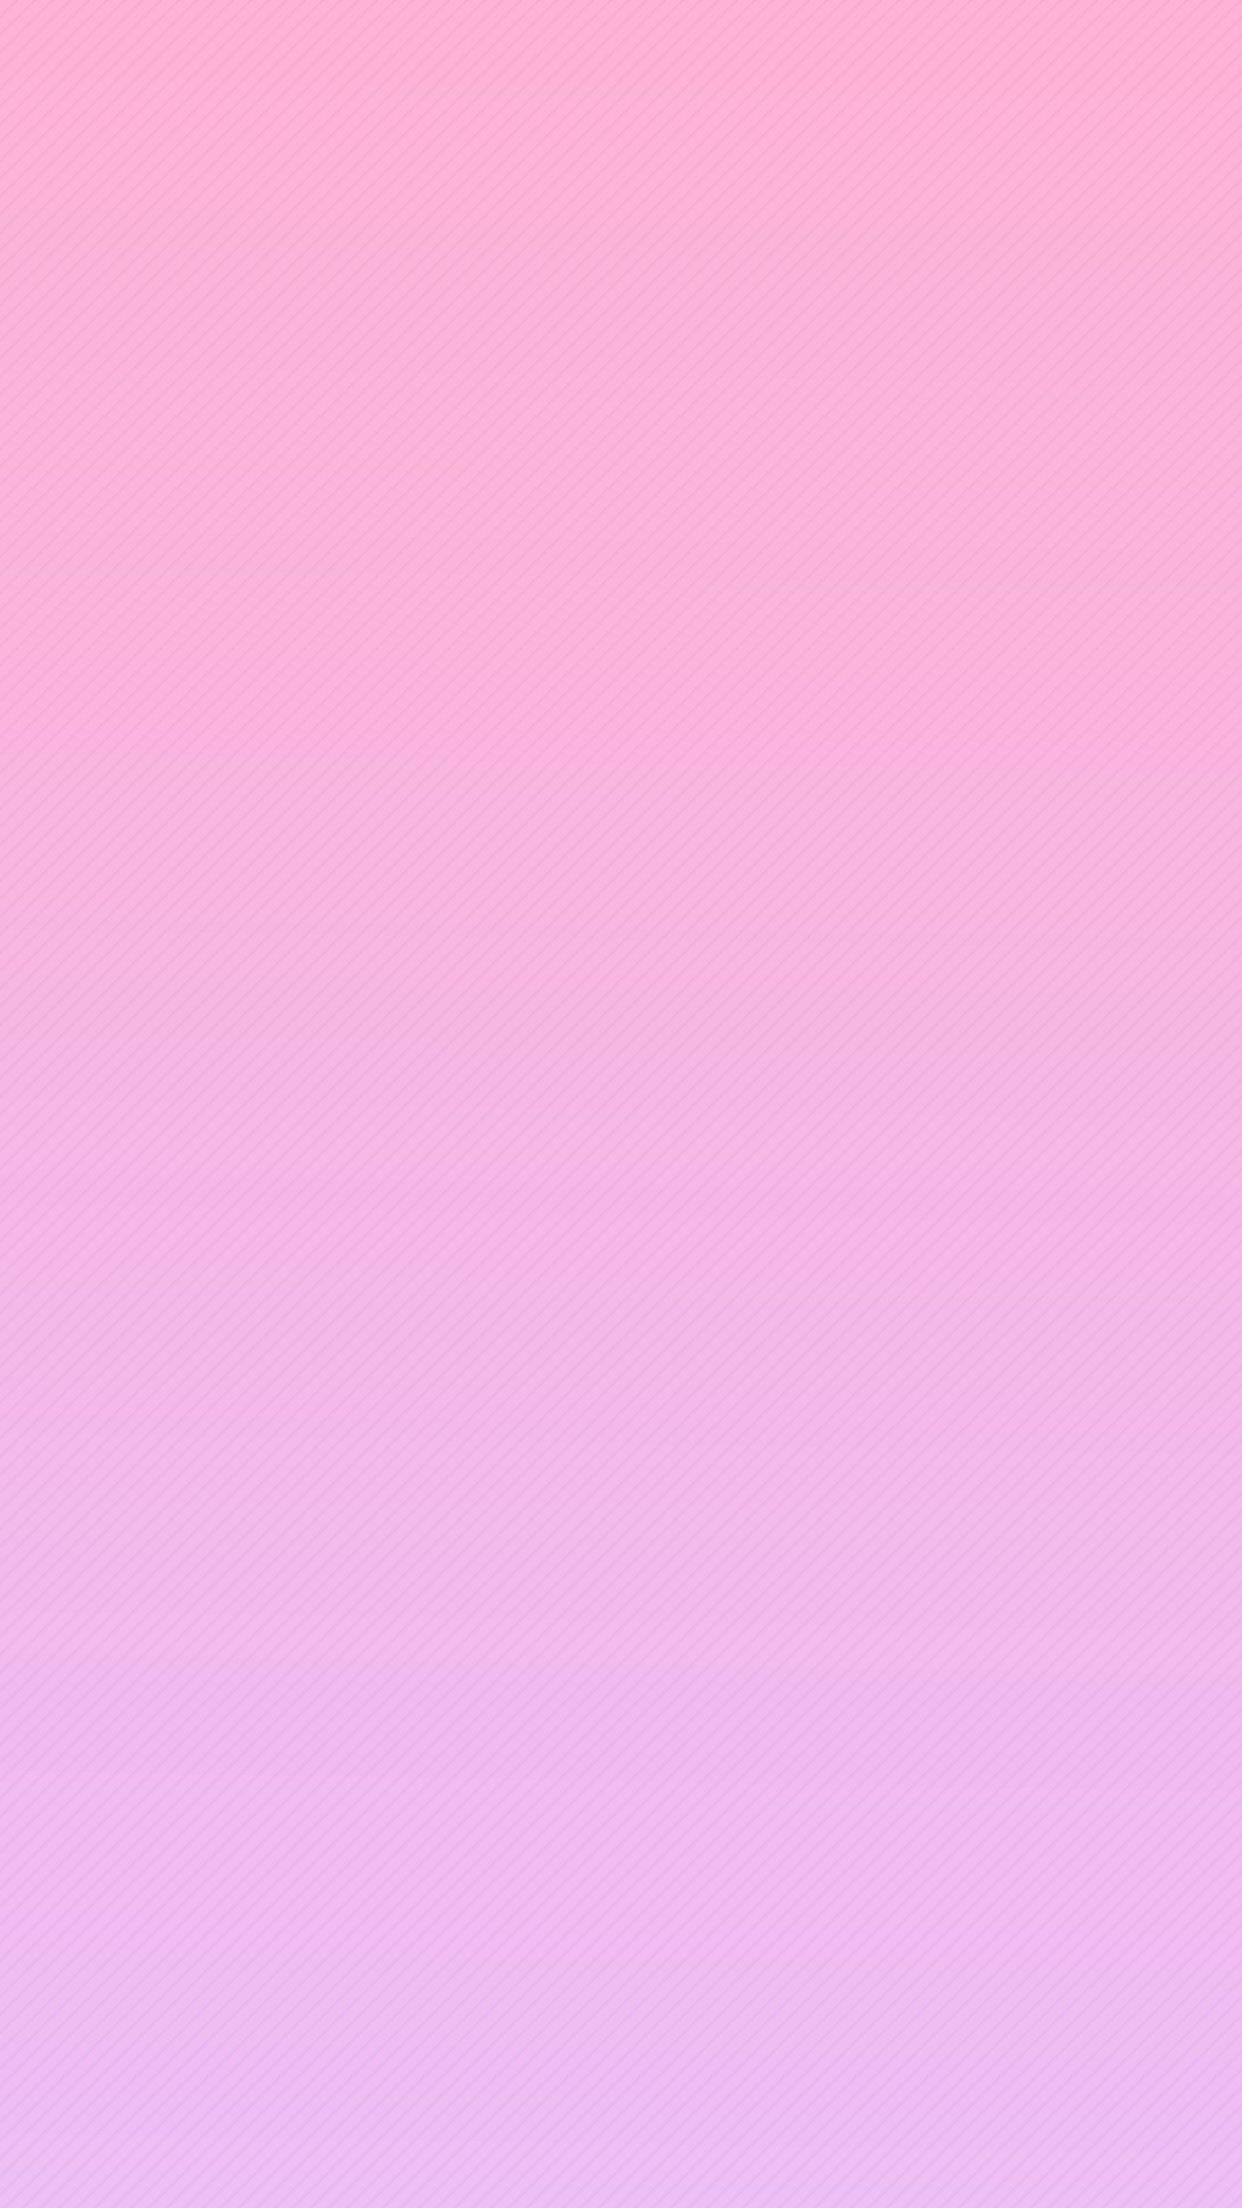 Pink Stuff Wallpapers - Wallpaper Cave